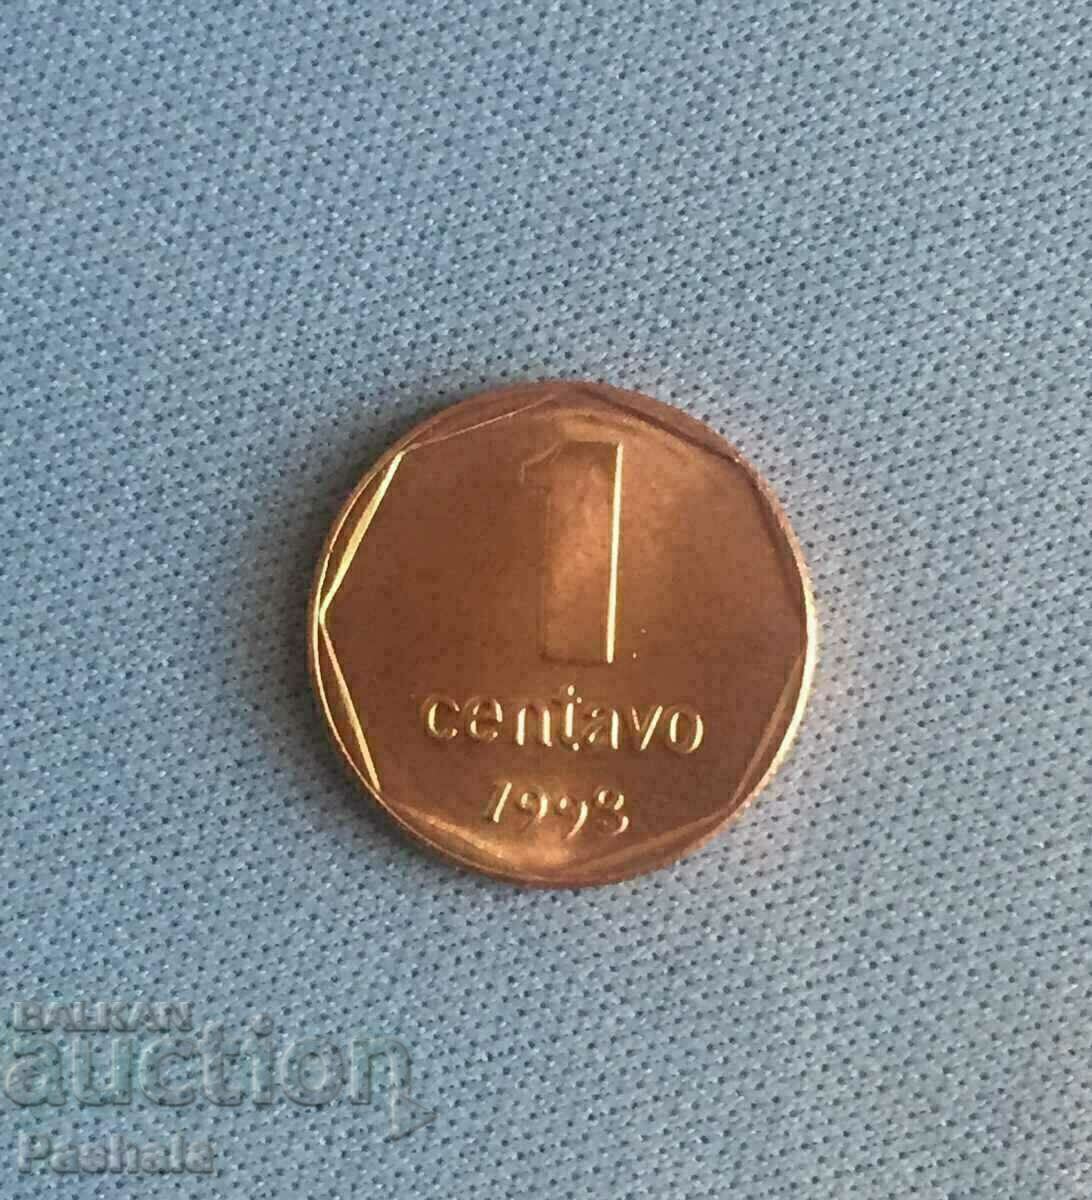 Argentina 1 centavo 1993